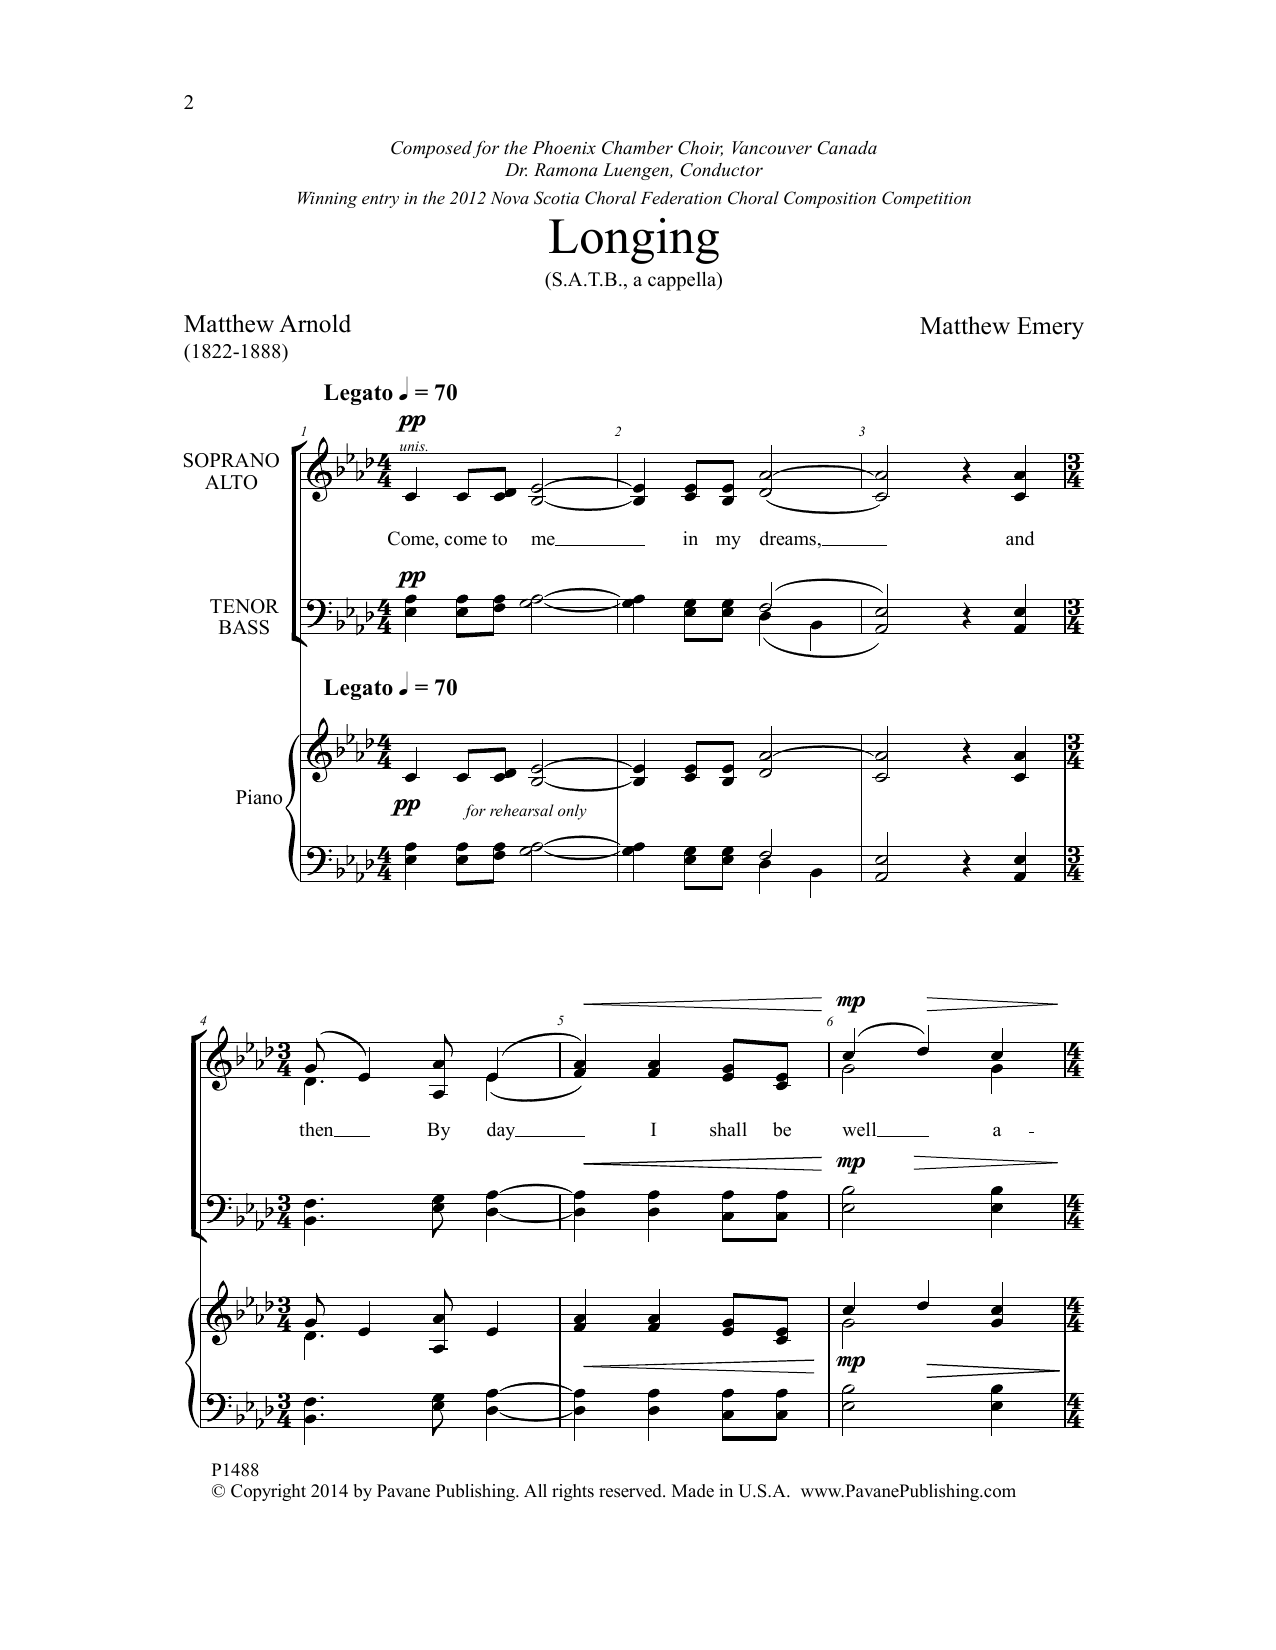 Matthew Arnold Longing Sheet Music Notes & Chords for Choral - Download or Print PDF